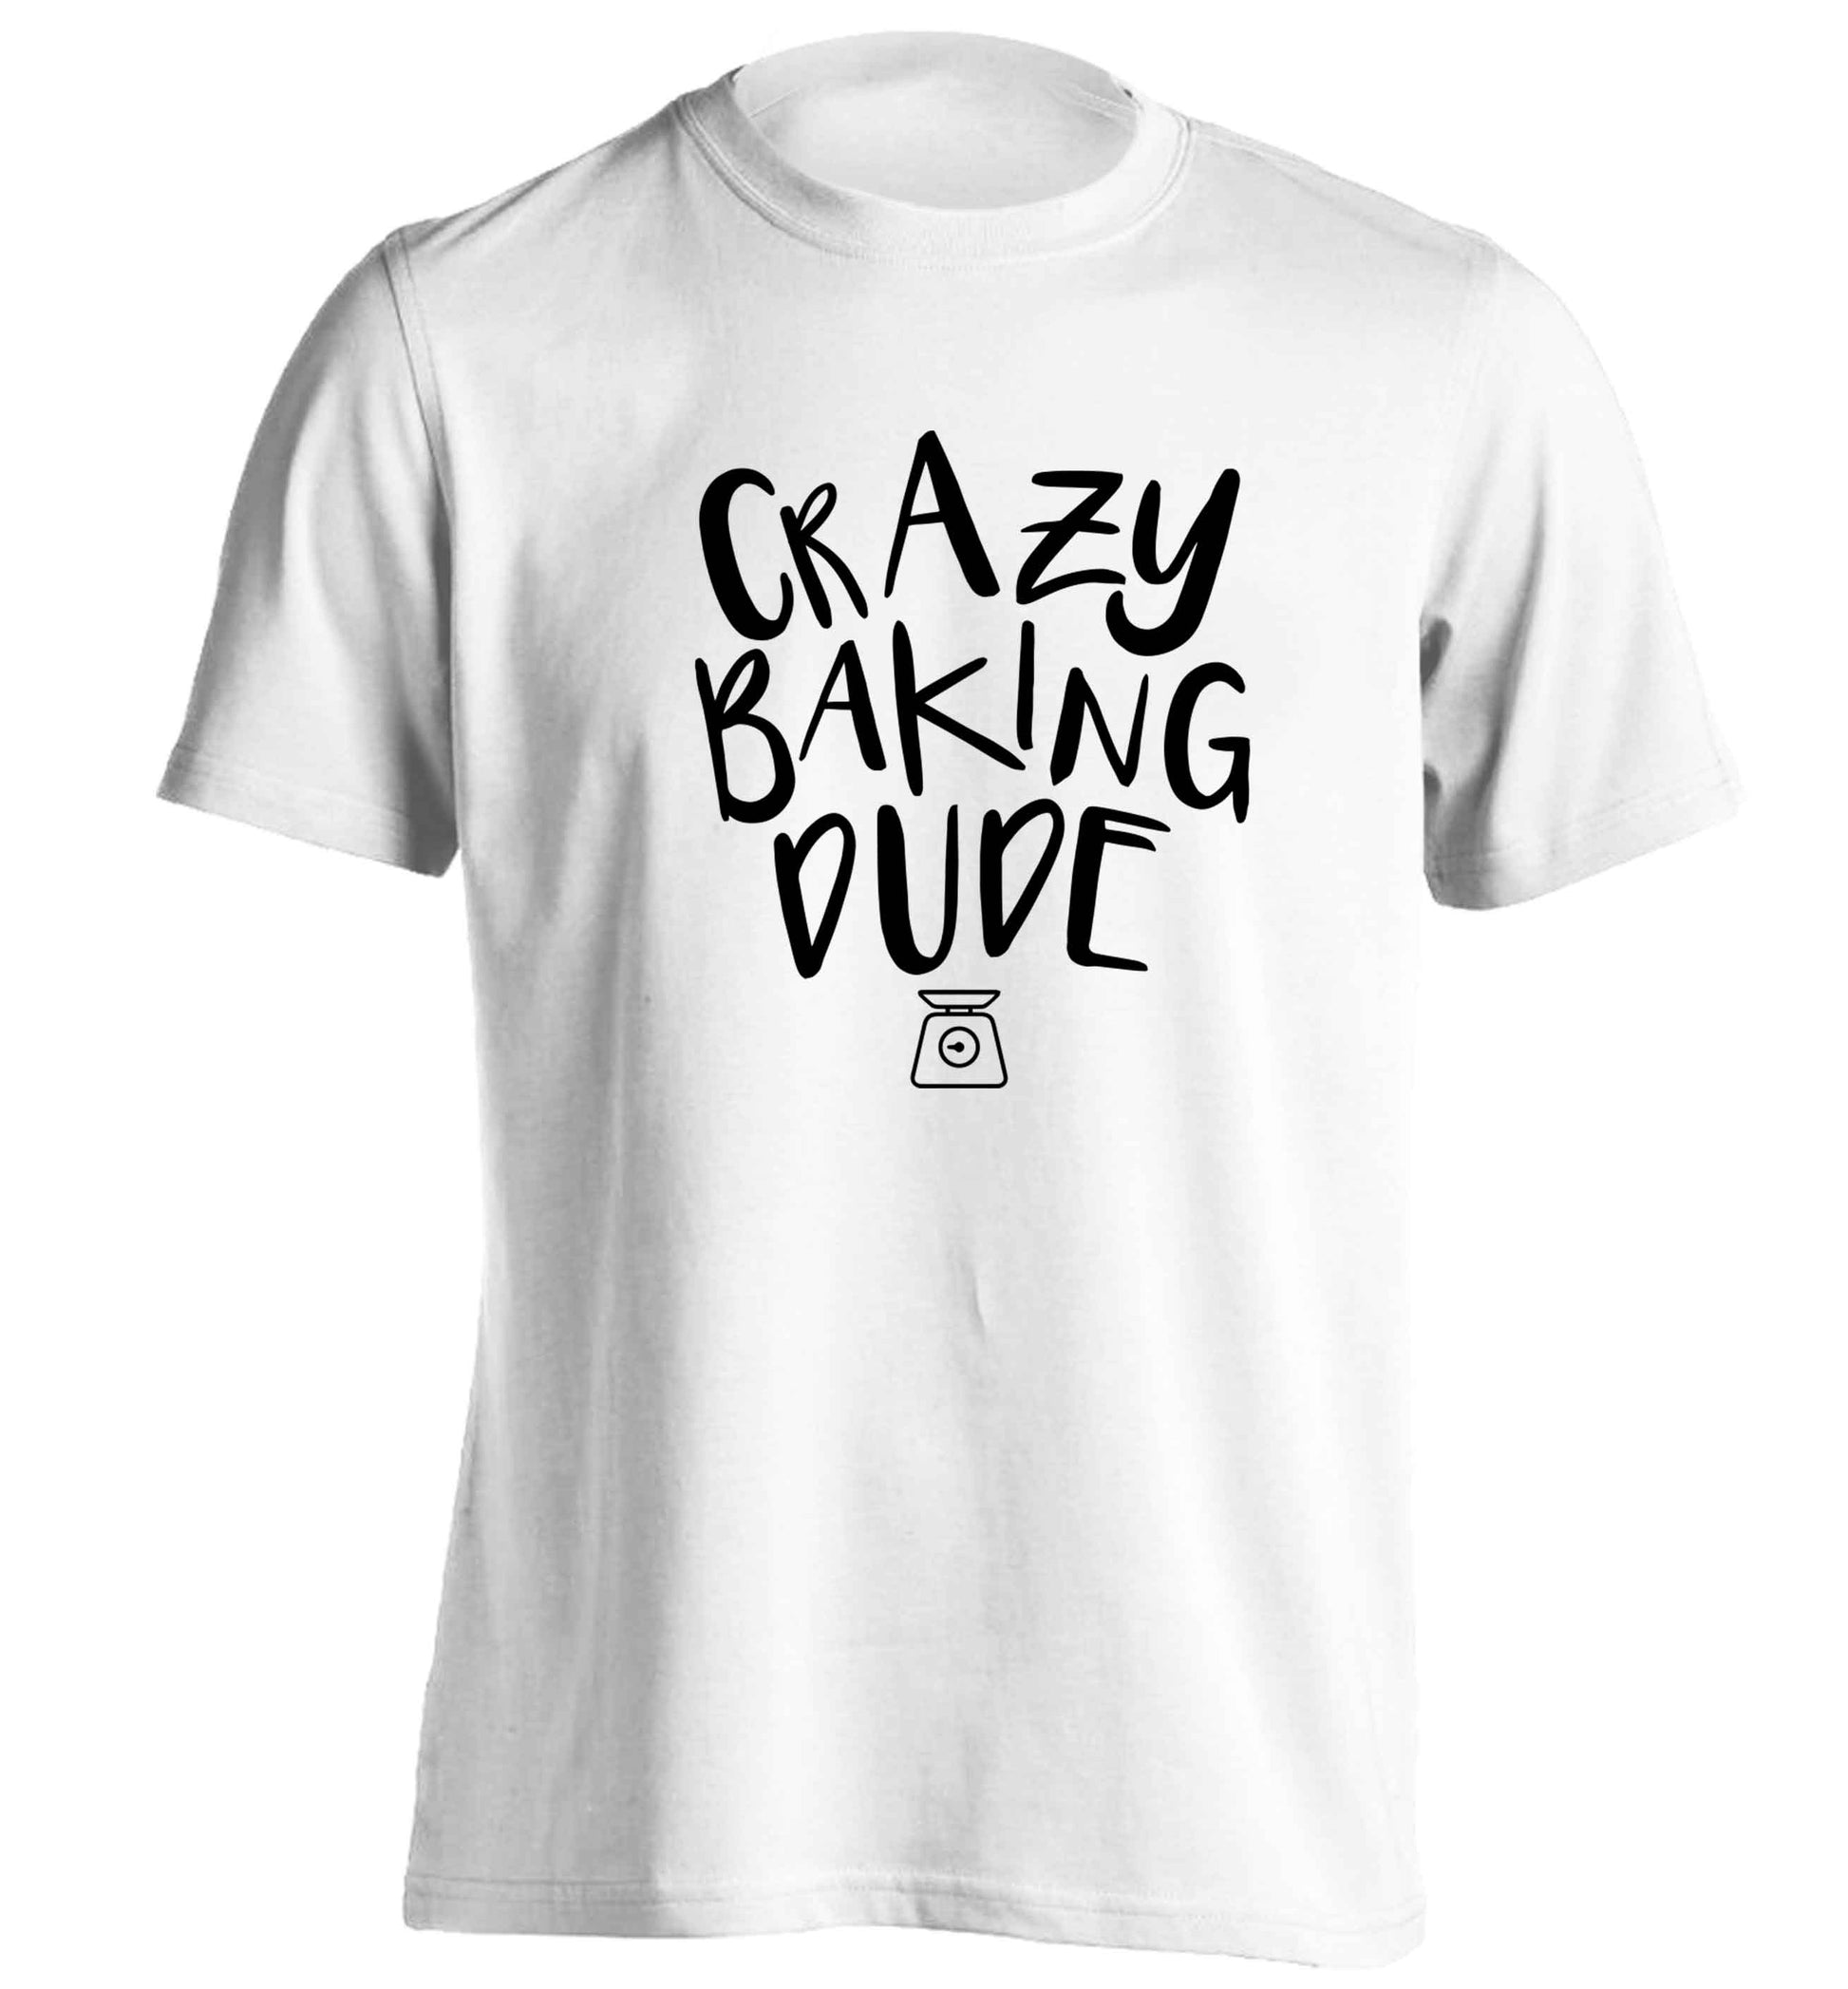 Crazy baking dude adults unisex white Tshirt 2XL